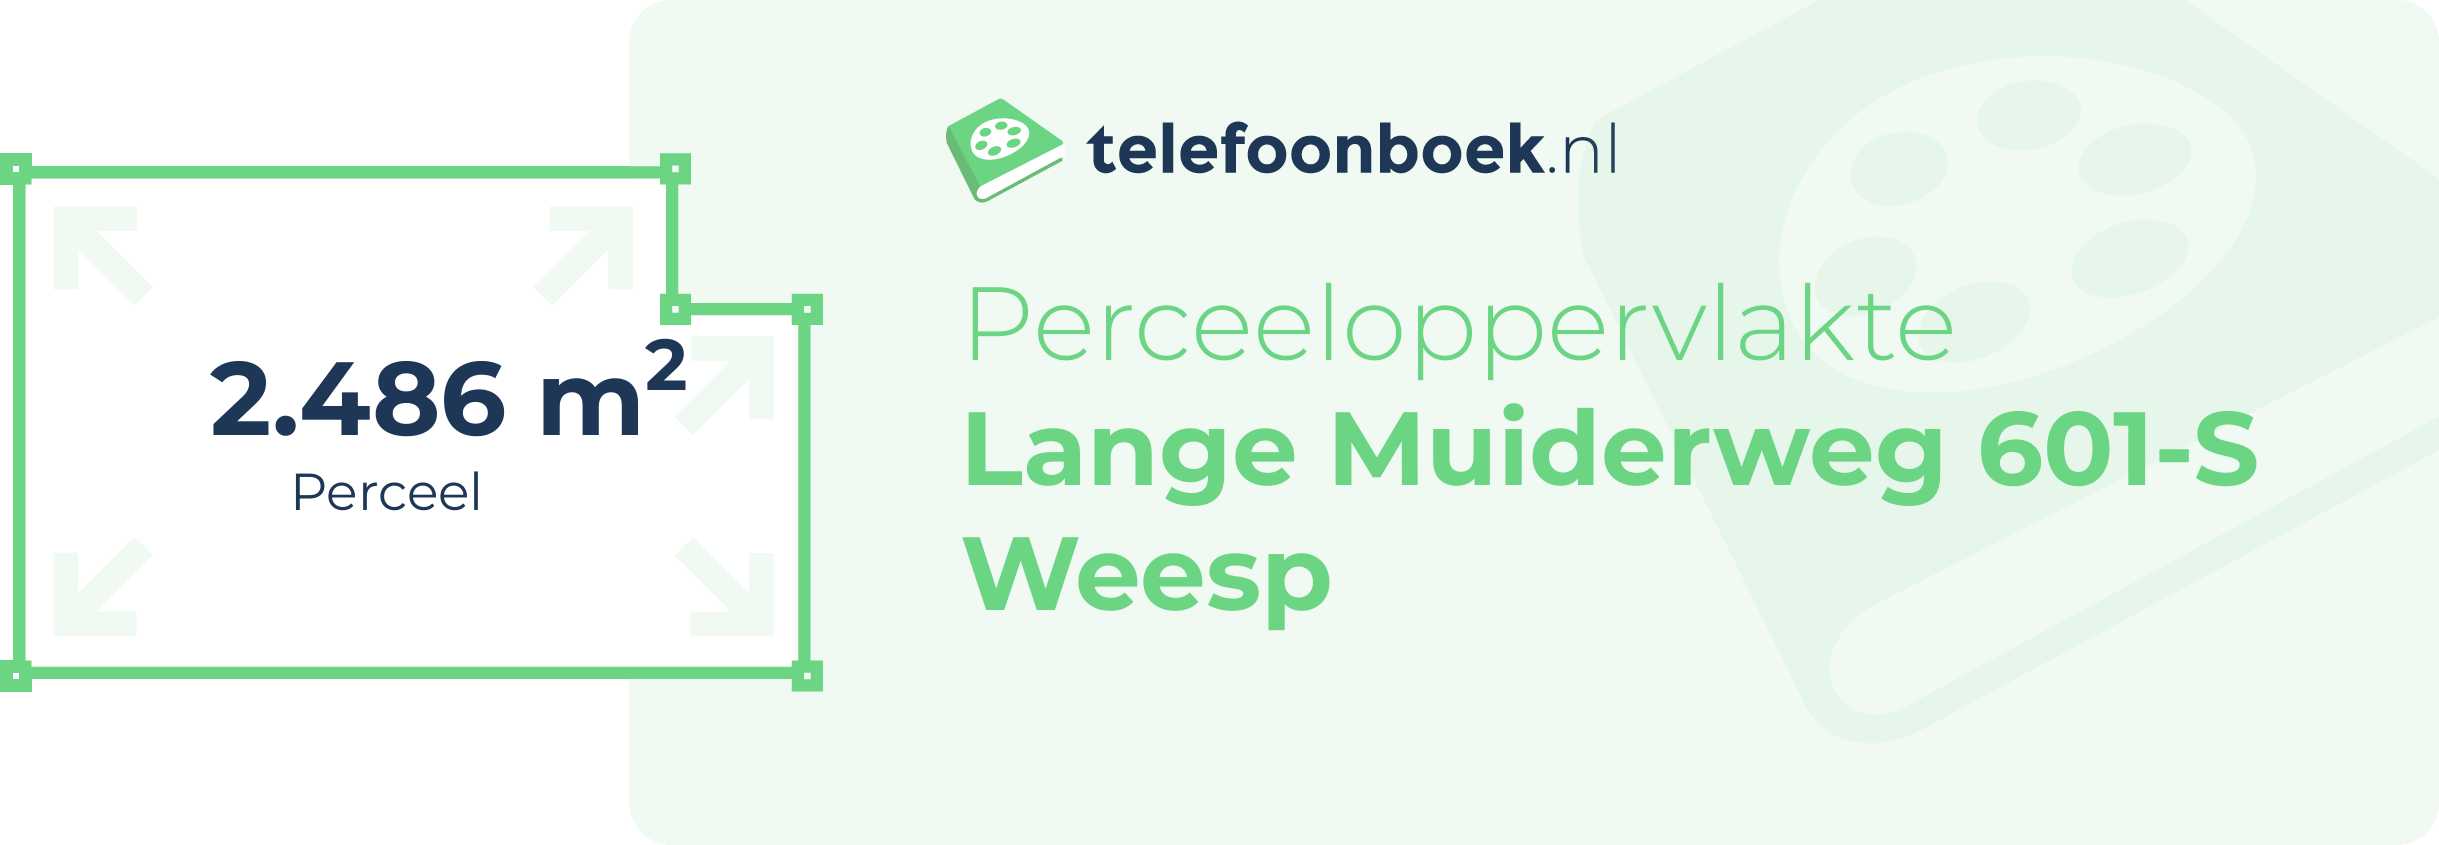 Perceeloppervlakte Lange Muiderweg 601-S Weesp